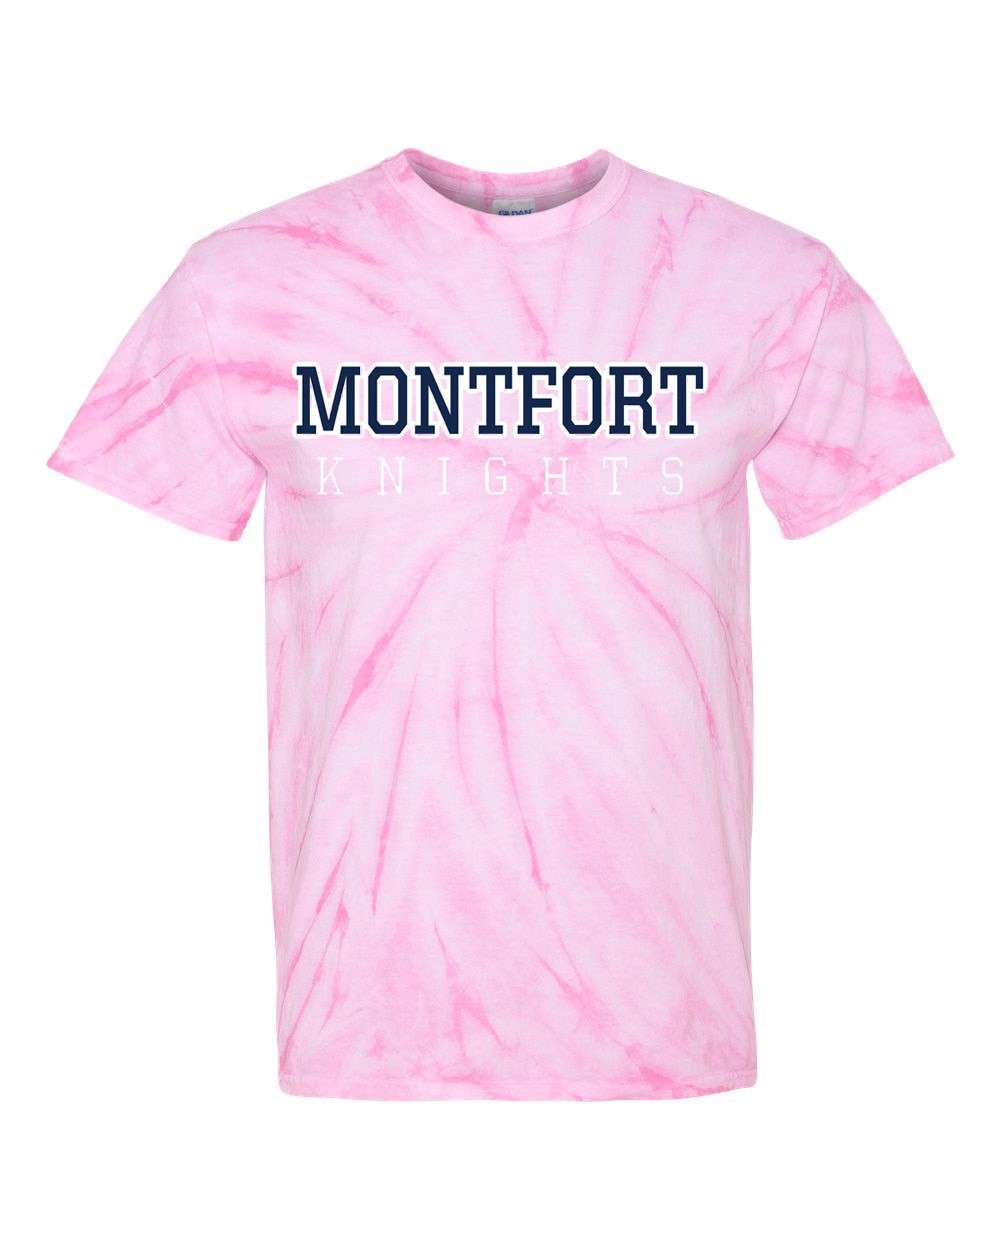 MONTFORT Spirit S/S Tie Dye T-Shirt w/ Navy Logo - Please Allow 2-3 Weeks for Delivery